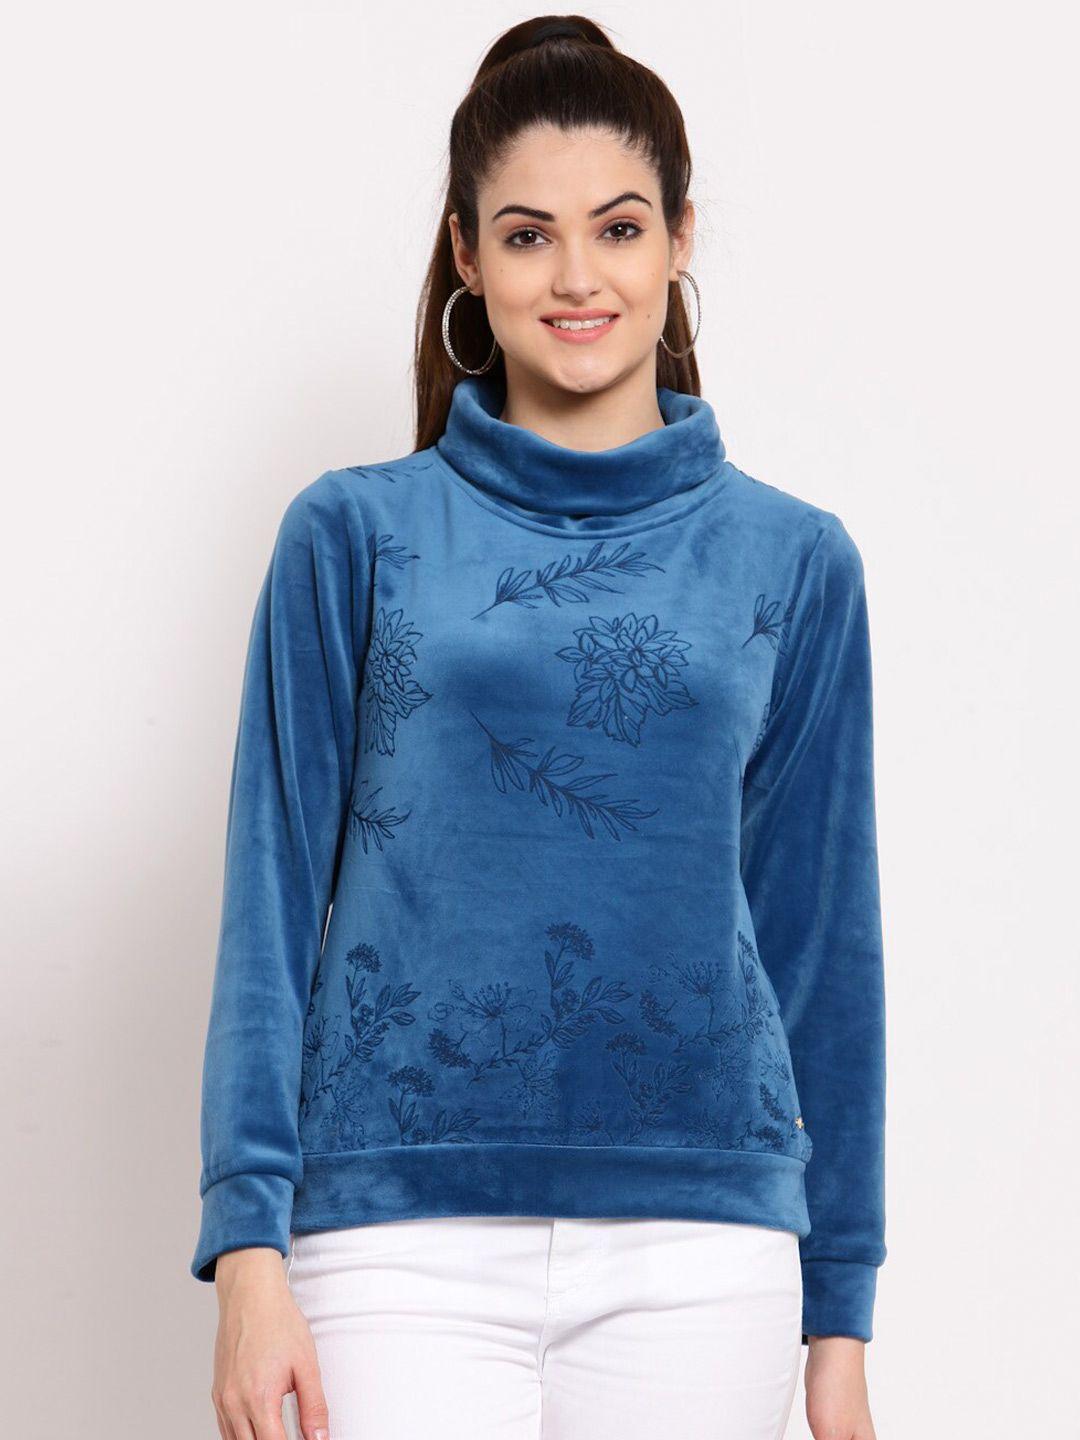 juelle women blue floral printed turtle neck sweatshirt